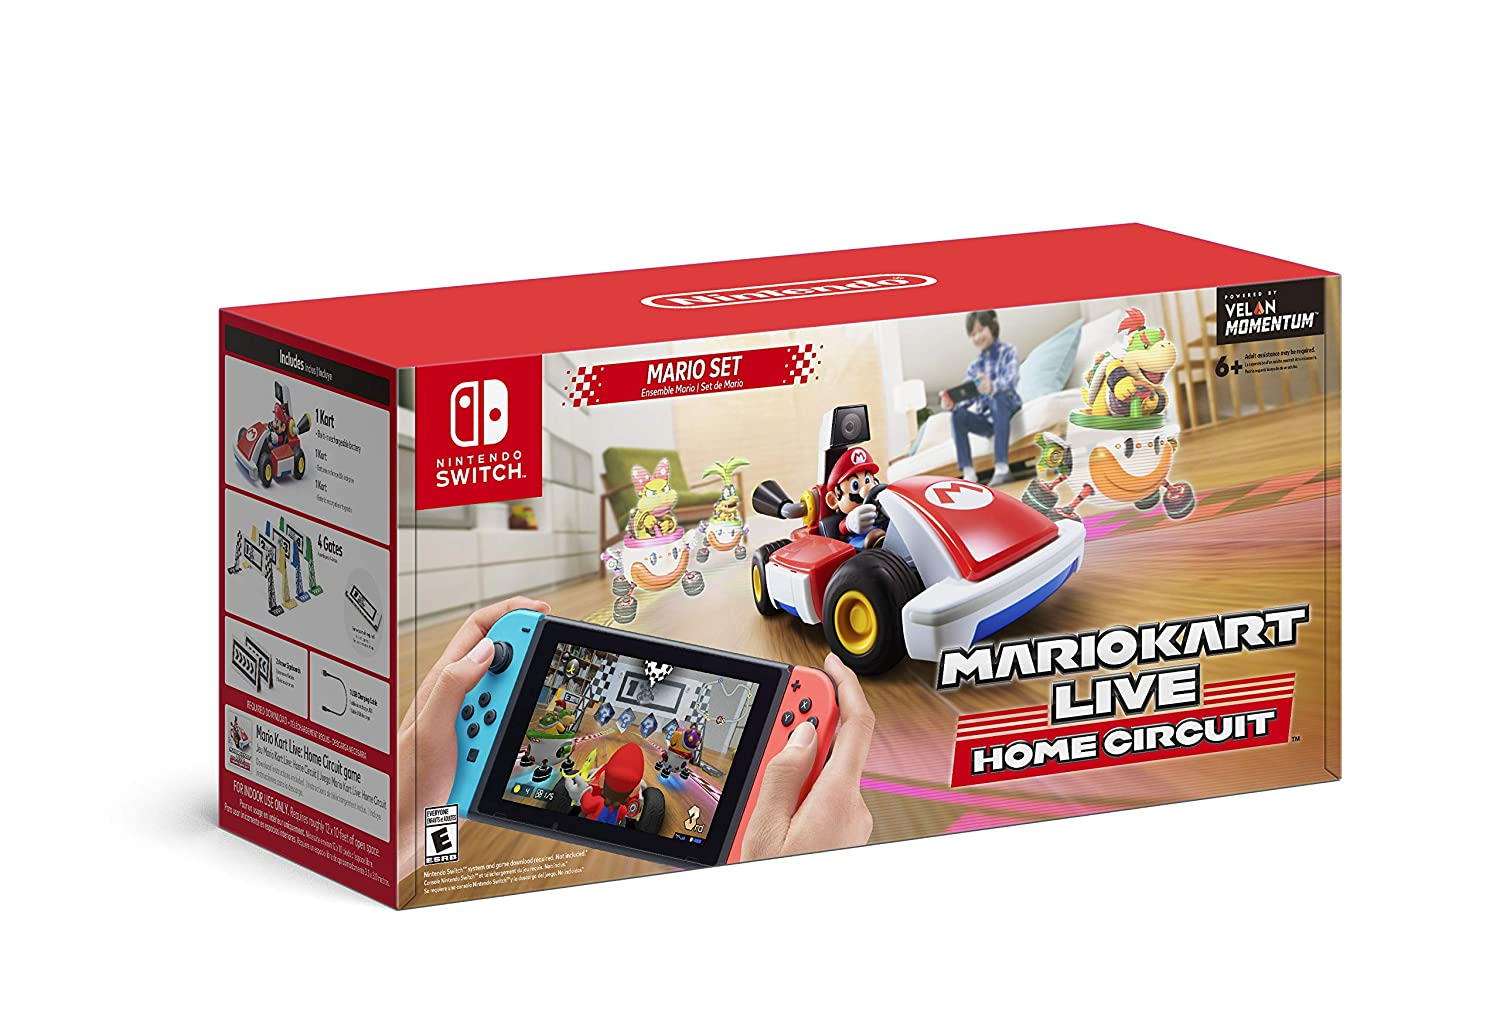 Mario Kart Live: Home Circuit - (YMMV + B&M) Mario Set, Nintendo, Nintendo Switch 00045496882839 - Walmart.com $30